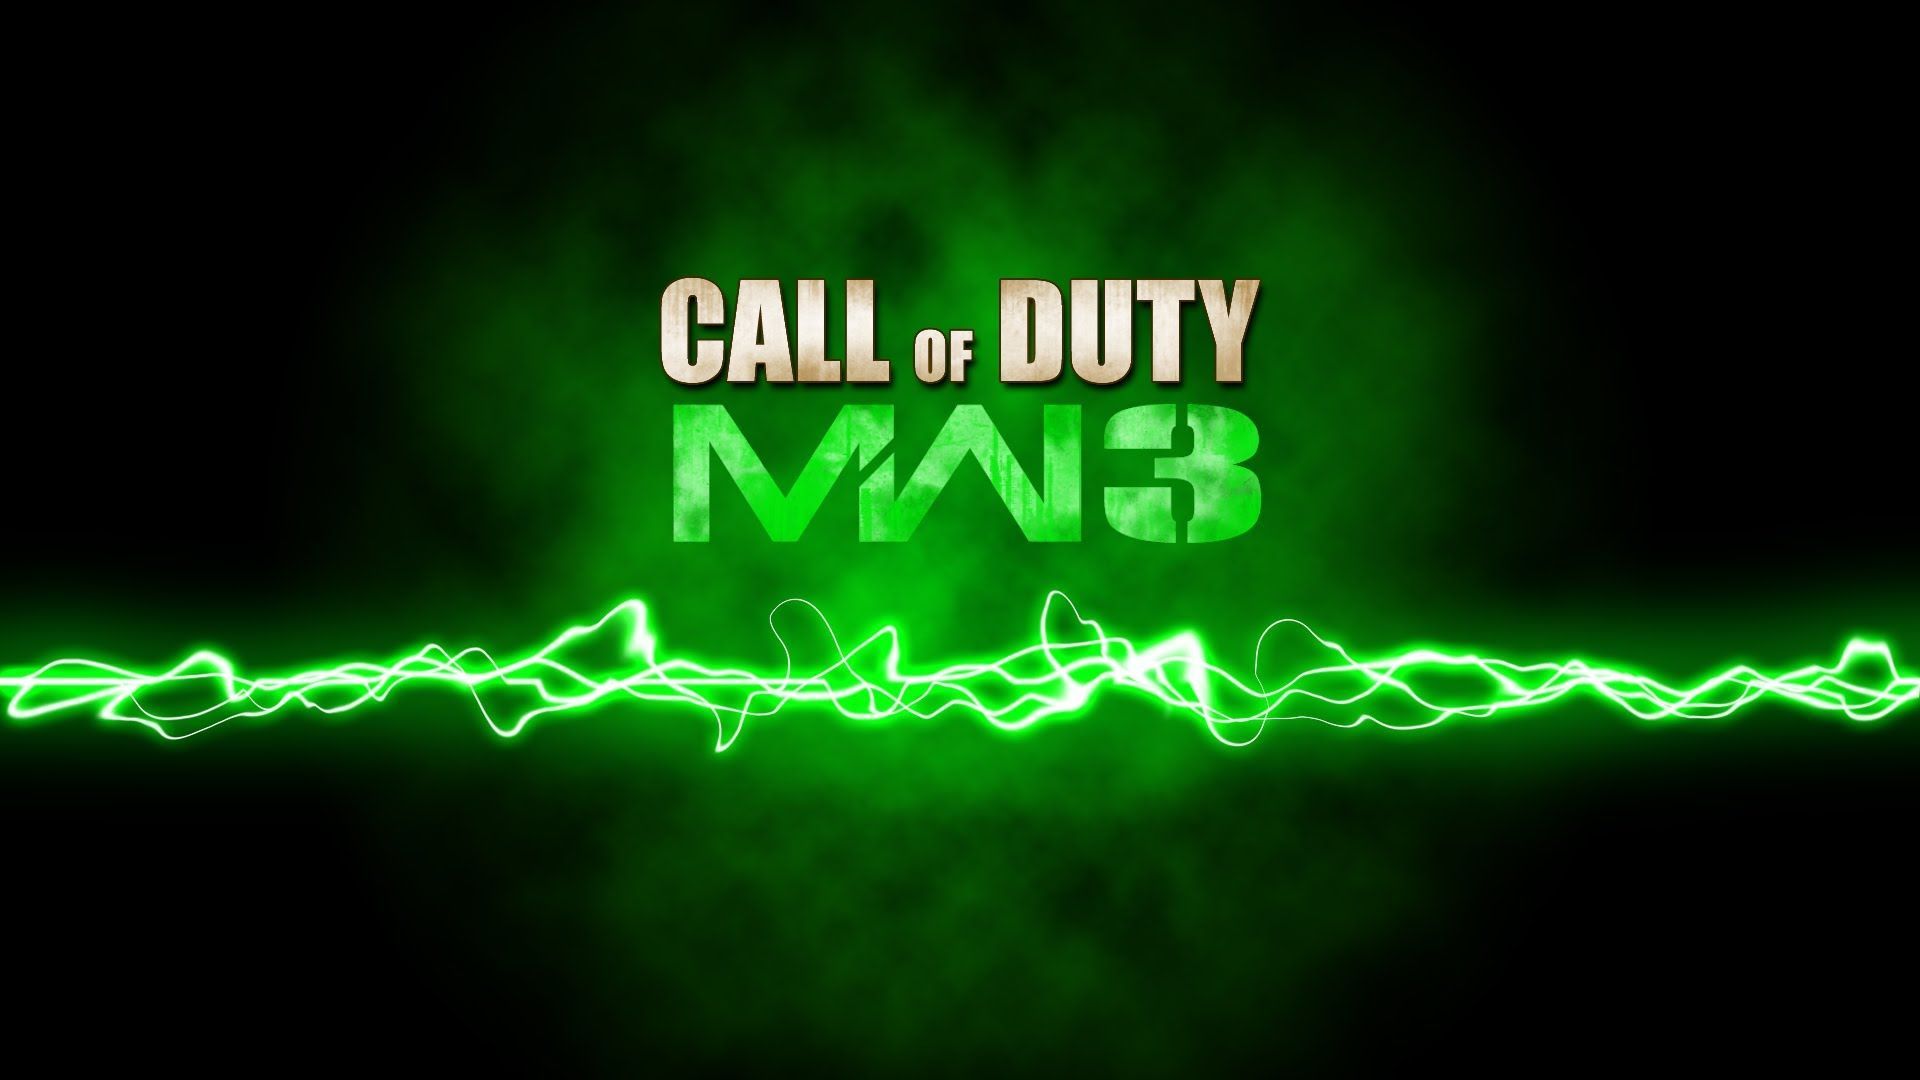 How to create Call of Duty Modern Warfare 3 wallpaper in Adobe